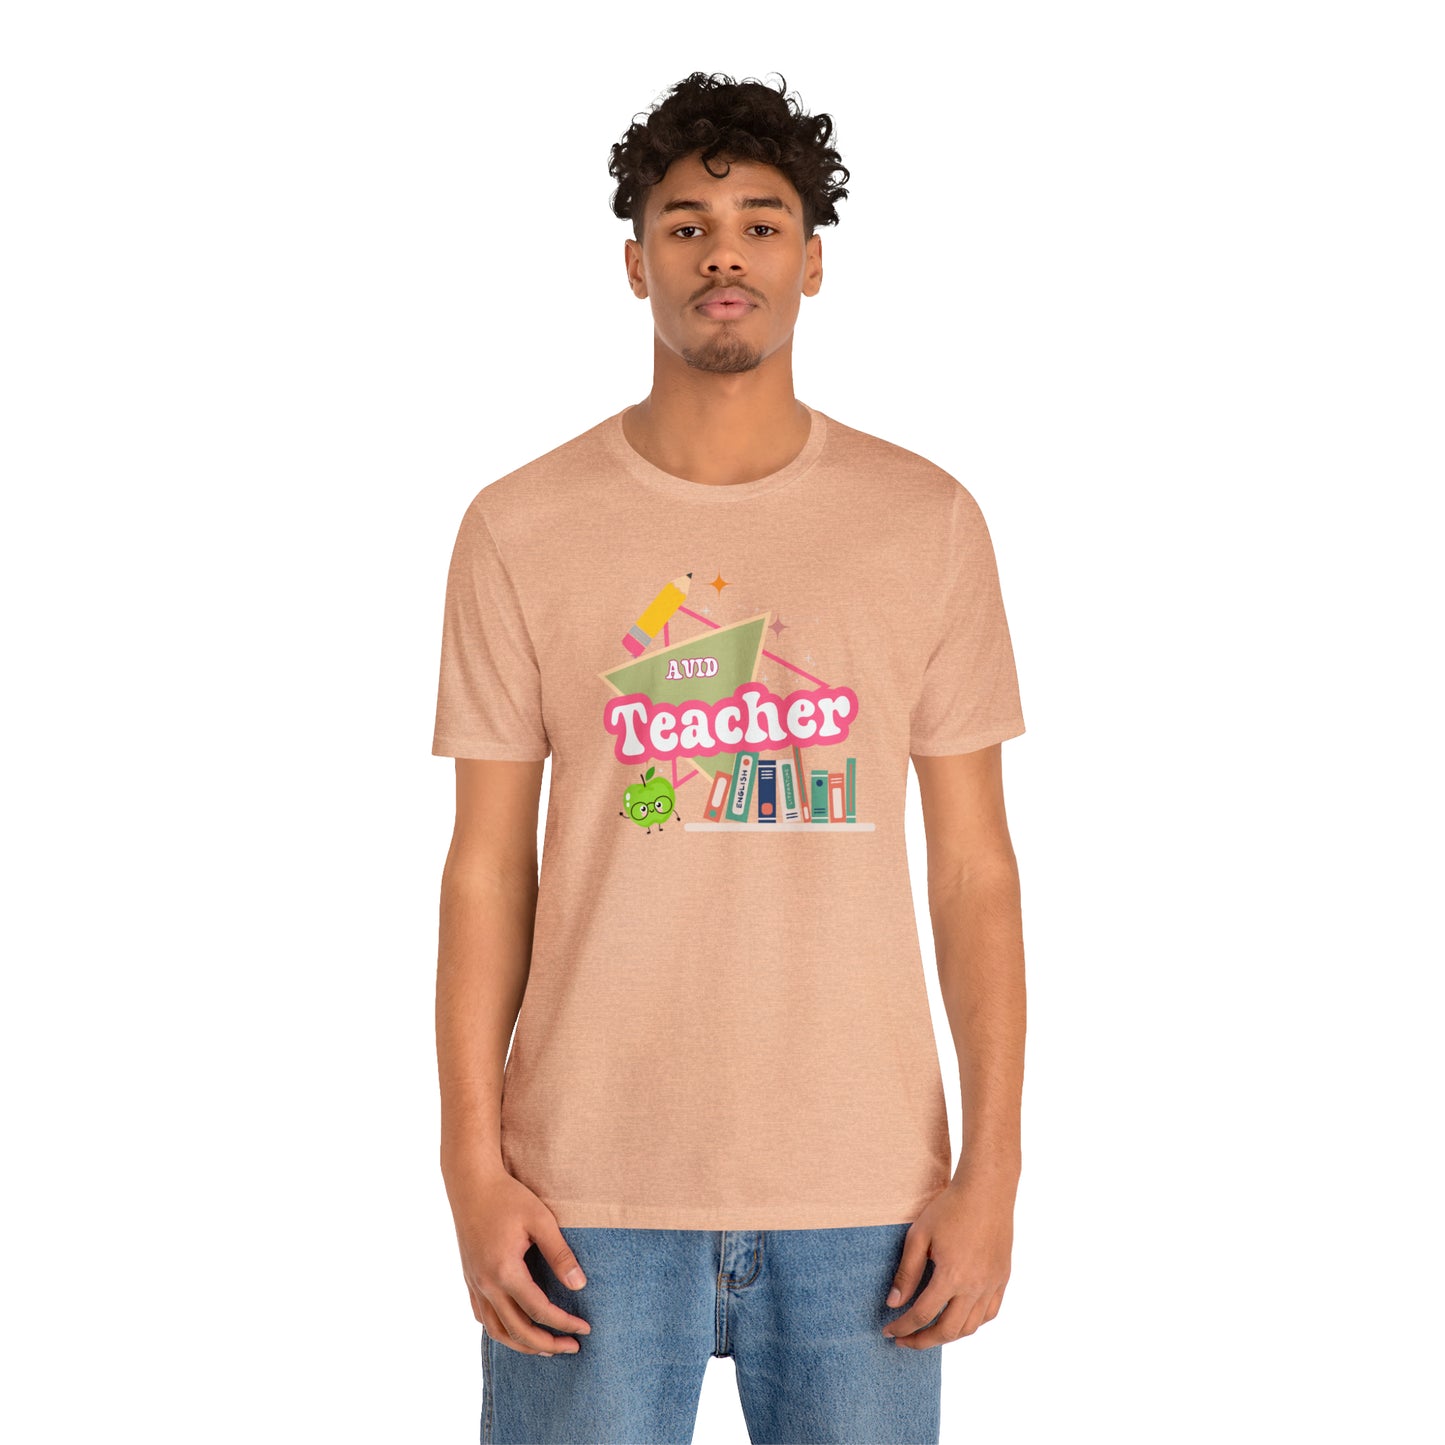 AVID shirt, 90s shirt, 90s teacher shirt, colorful school secretary shirt, colorful school shirt, T545